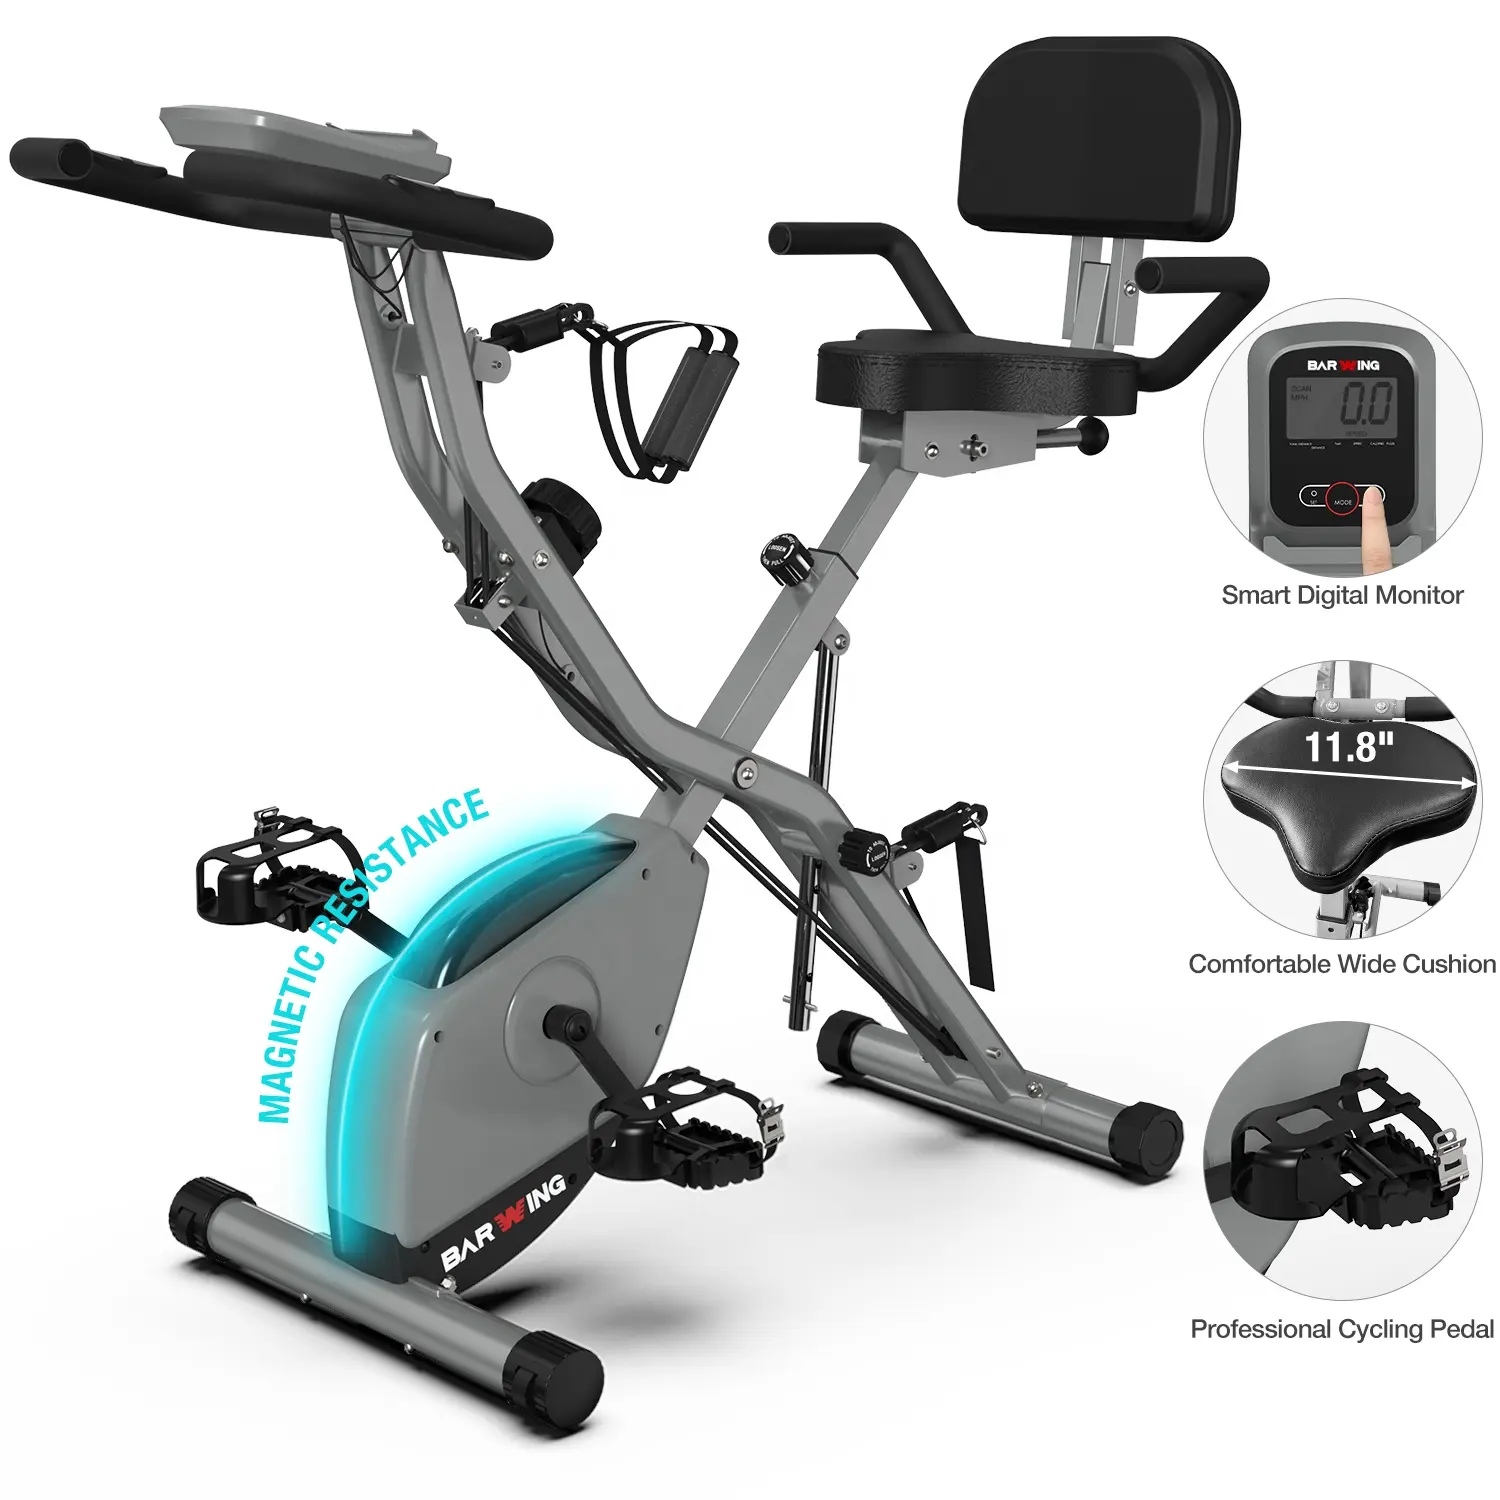 Gym master body fit building foliding adjustment indoor X exercise bike fitness bike with flywheel